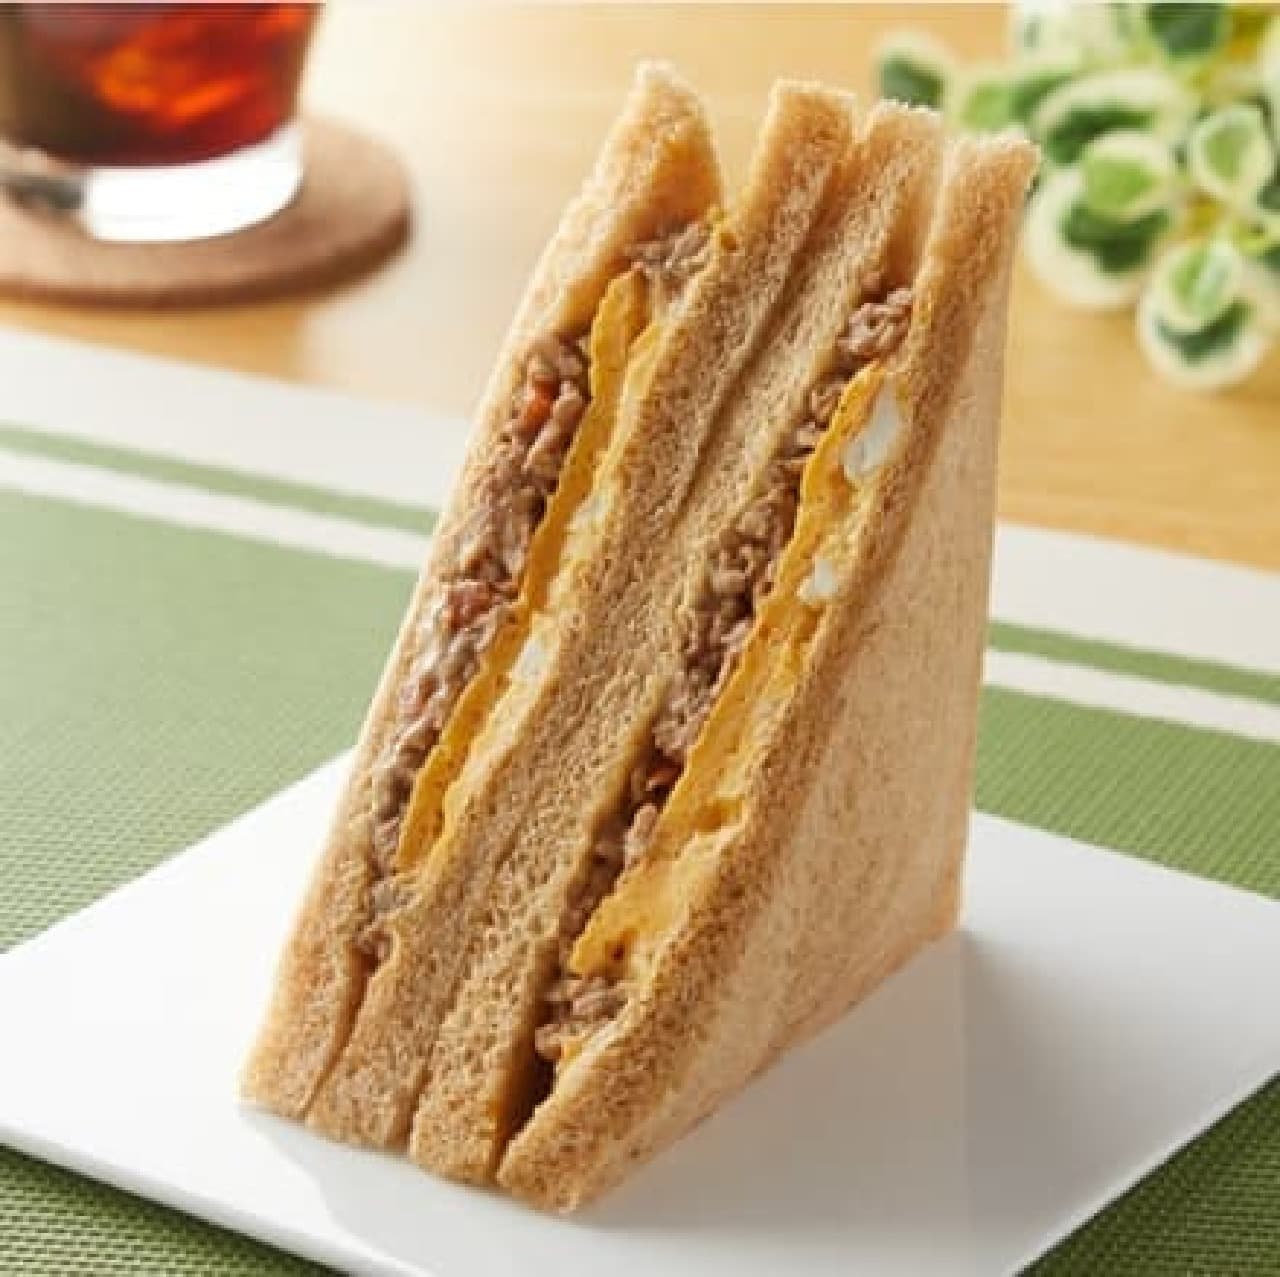 FamilyMart "Whole grain sandwich chicken soboro and egg"